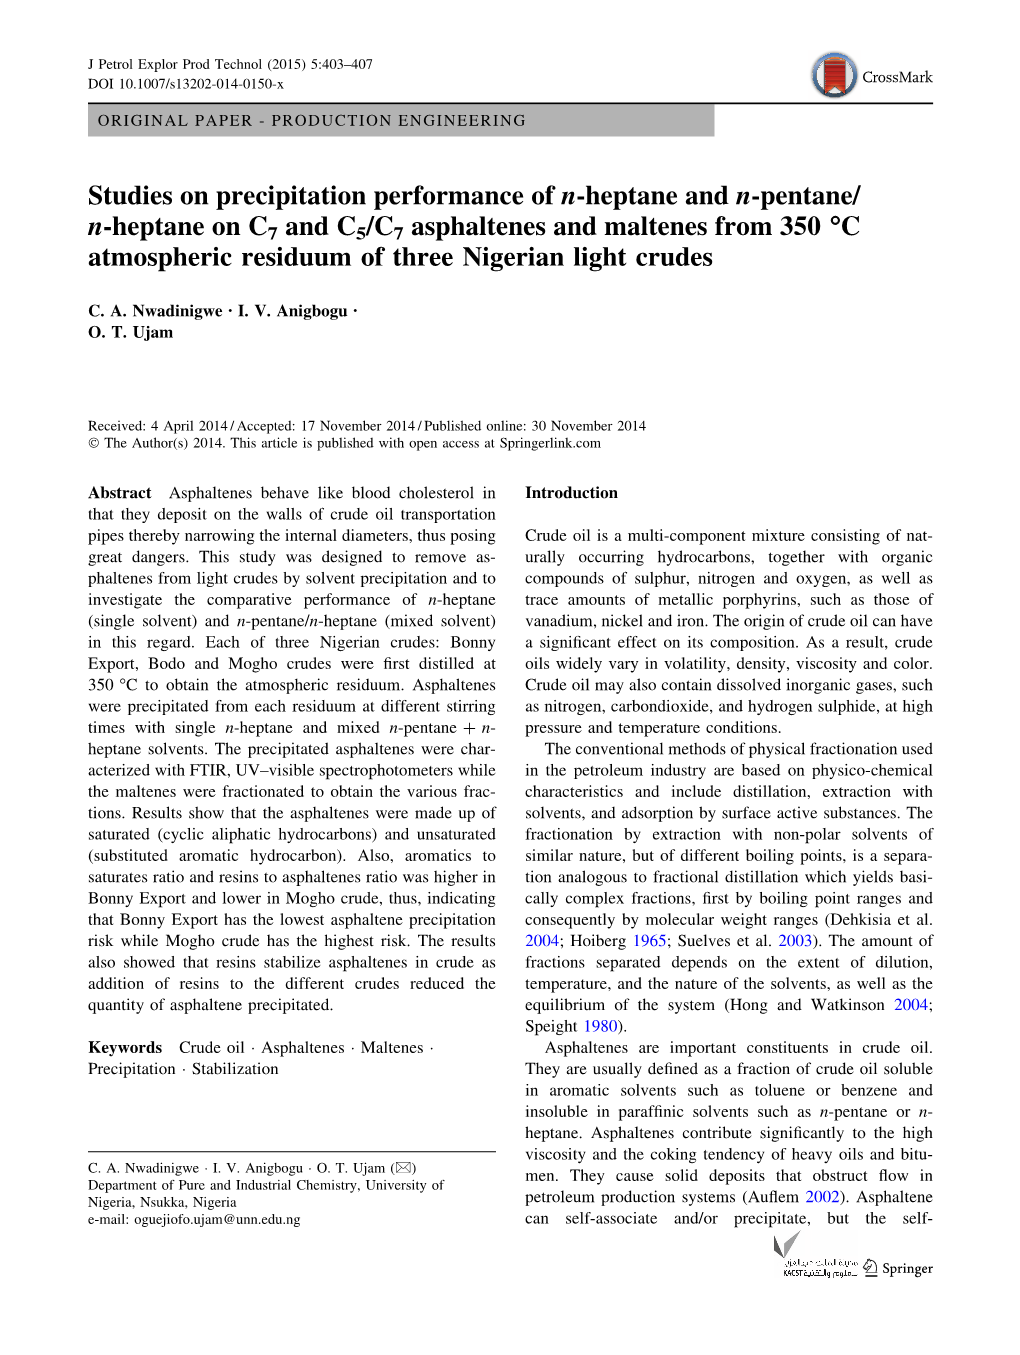 Studies on Precipitation Performance of N-Heptane and N-Pentane/N